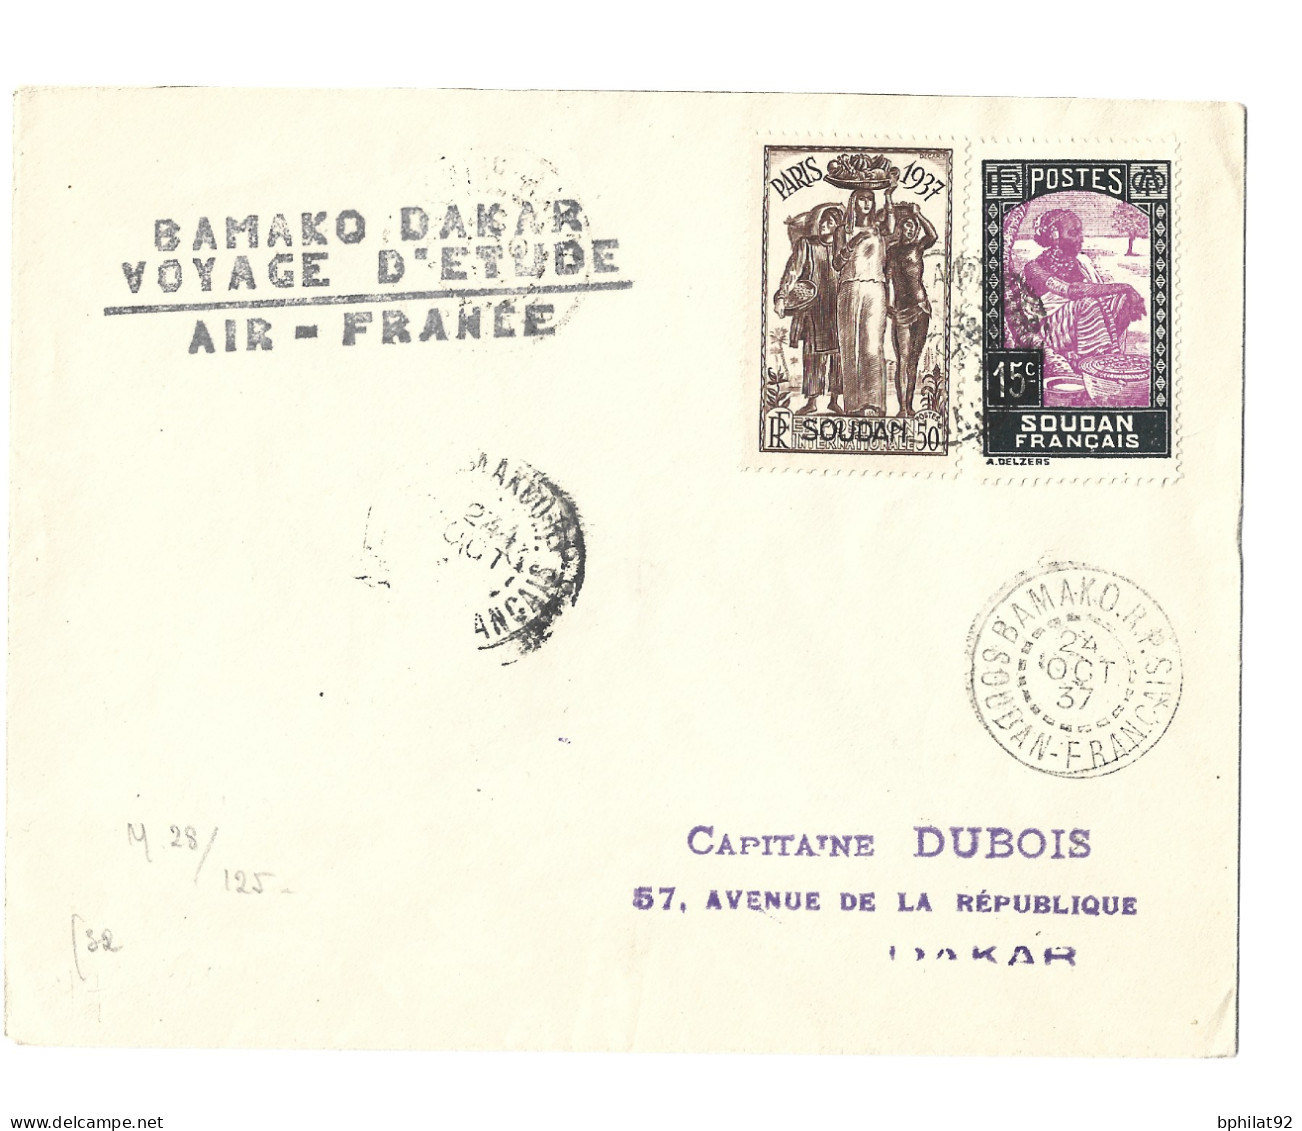 !!! BAMAKO-DAKAR, VOYAGE D'ÉTUDE AIR FRANCE OCTOBRE 1937, CACHET DU SOUDAN FRANÇAIS - Cartas & Documentos